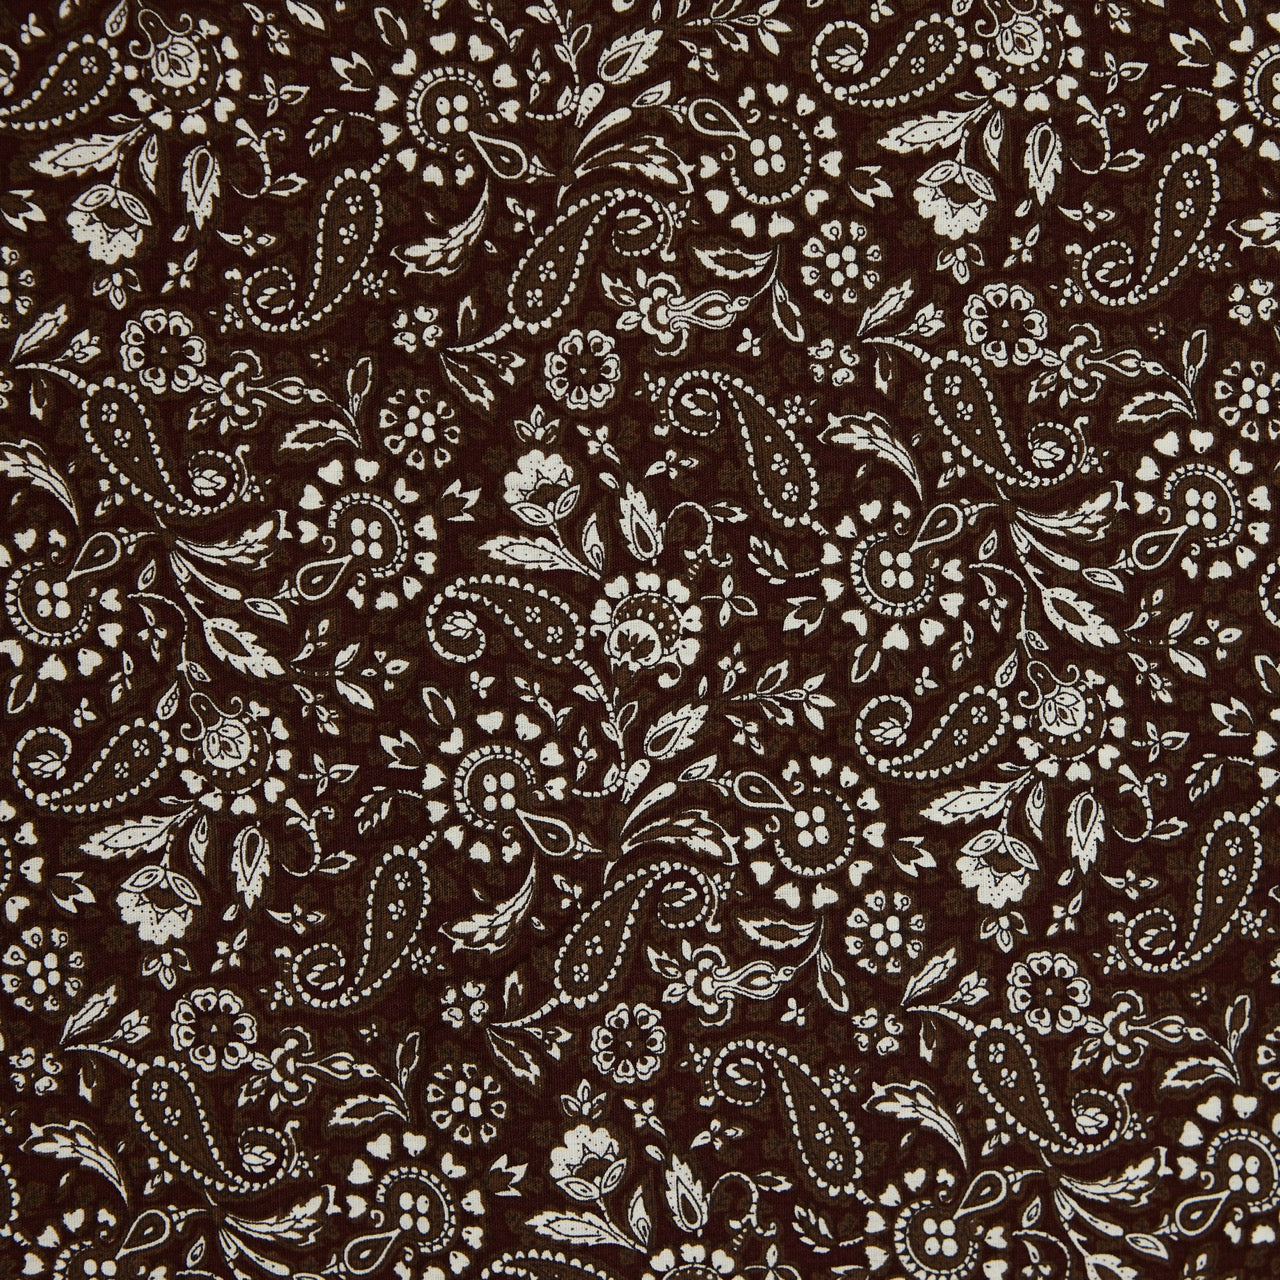 Cotton Floral - Paisley # 2 - Brown (detail)